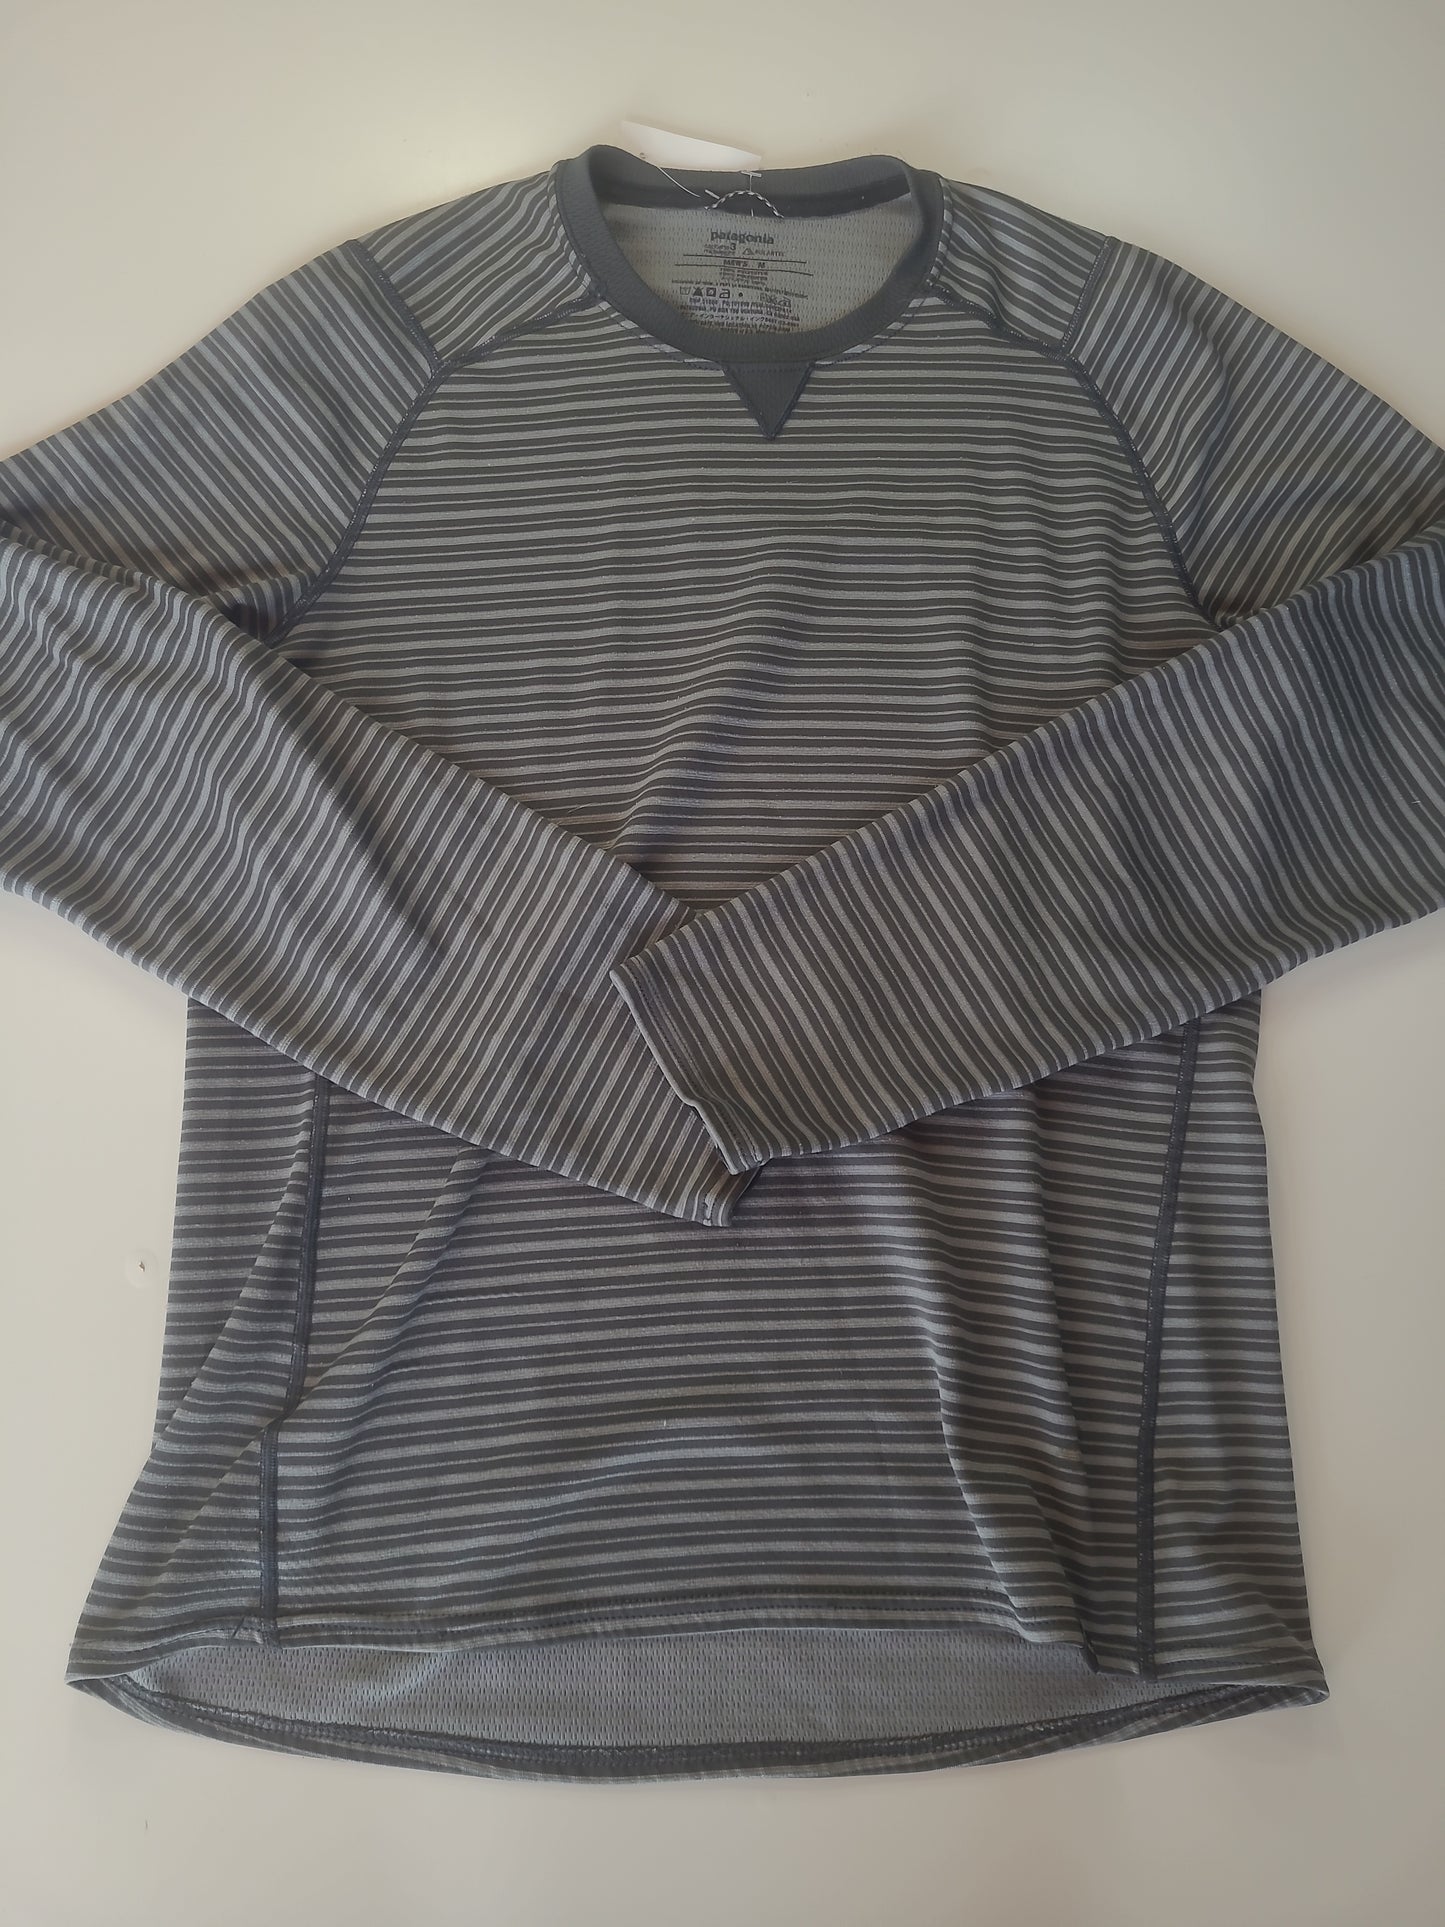 Patagonia Polartec Long Sleeve Shirt Gray - Medium